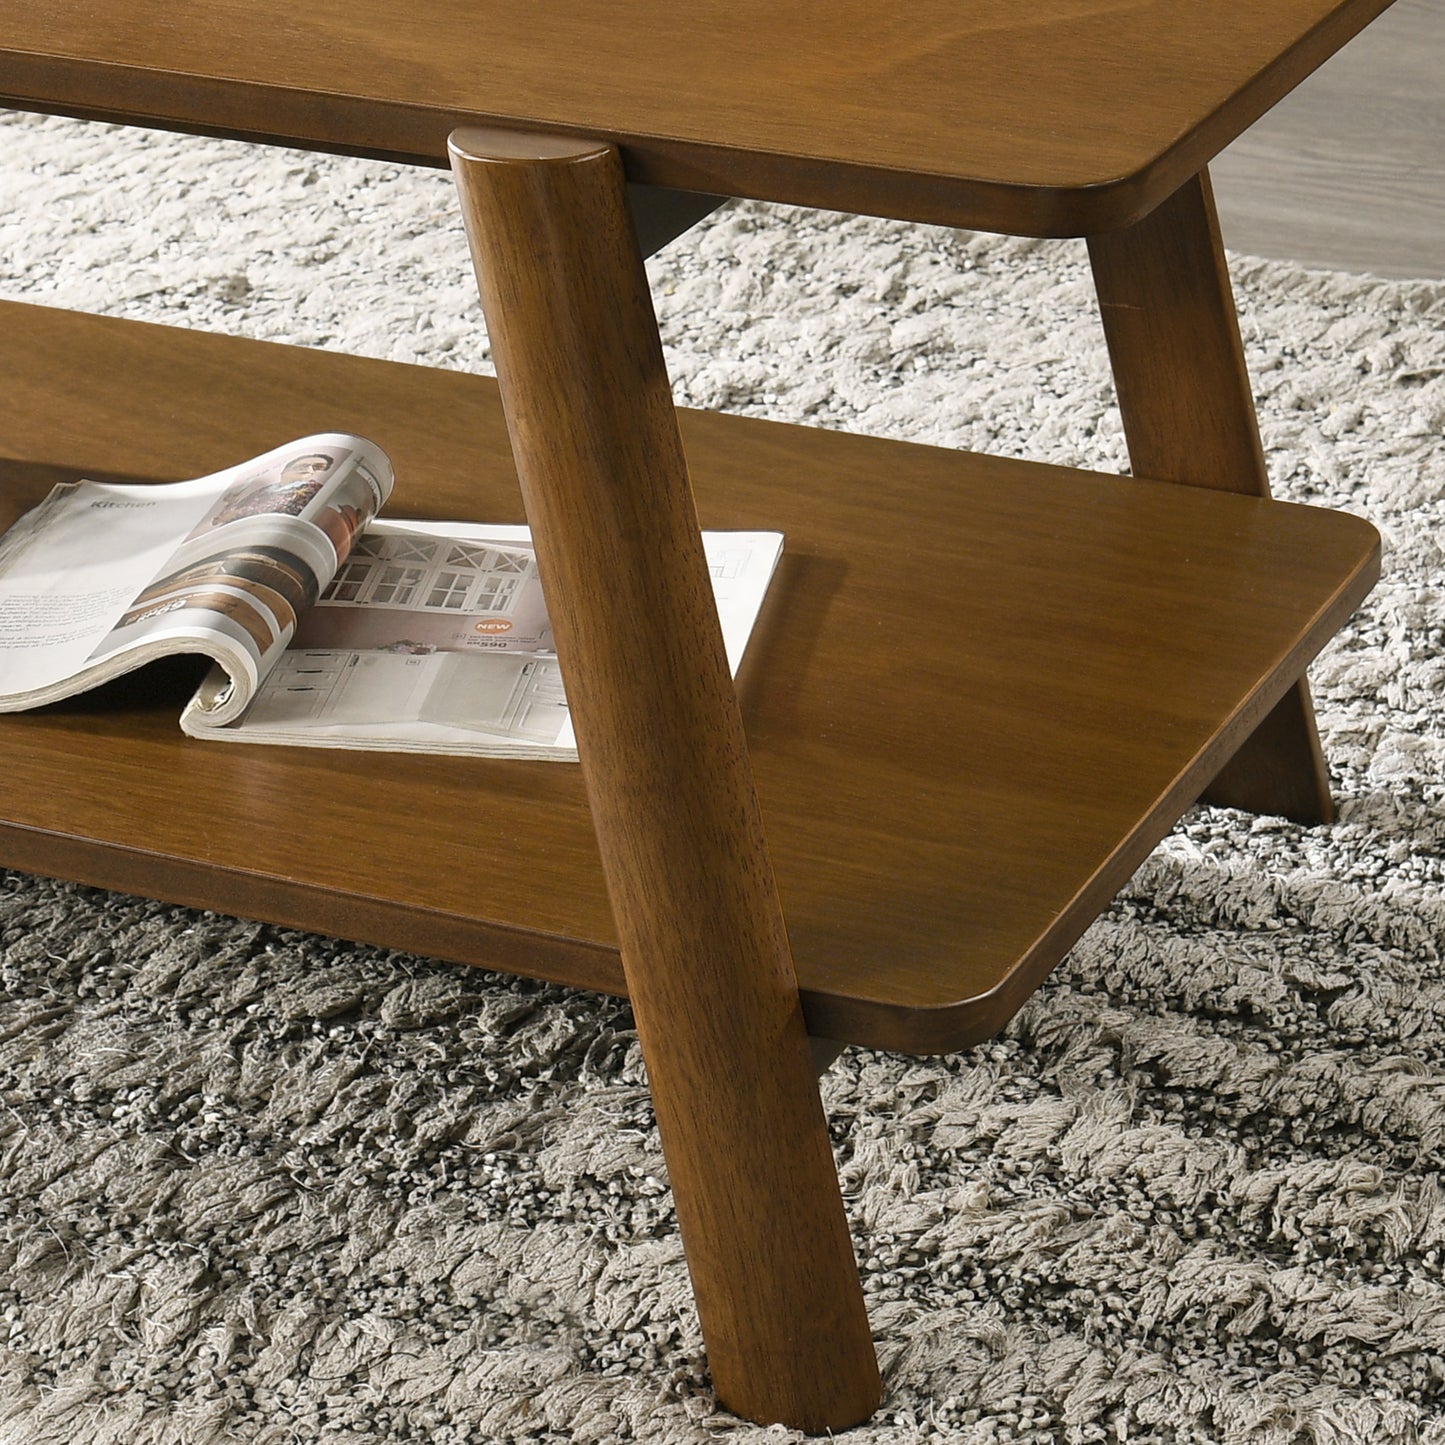 Metz Mid-Century Modern Wood Shelf End Table, Walnut Finish